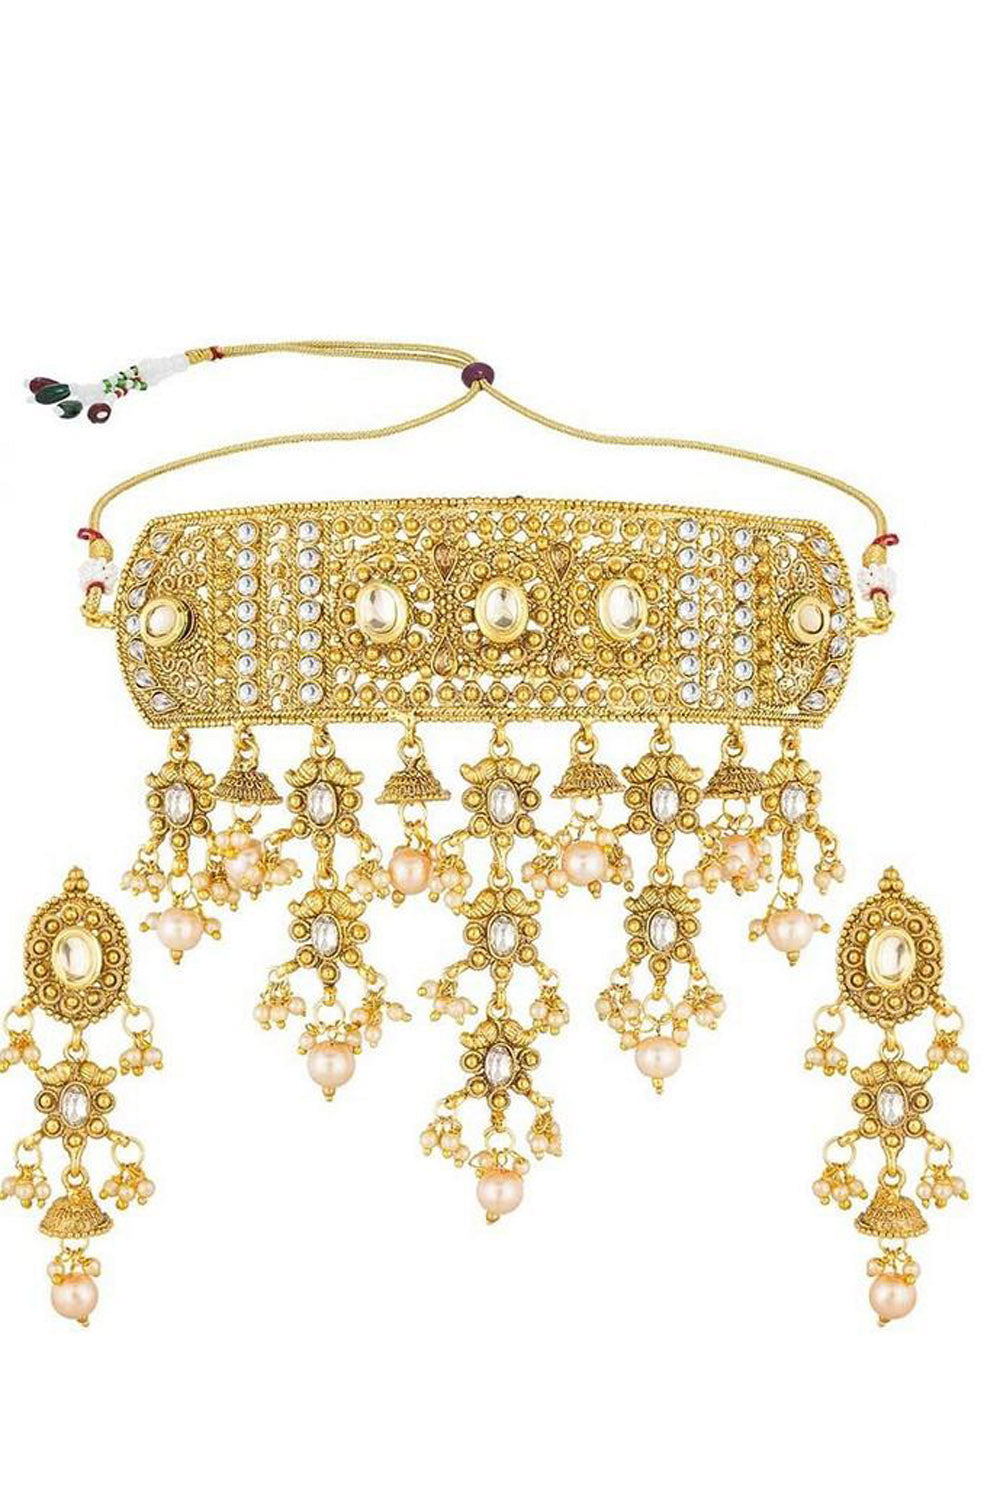  Buy Women's Alloy Necklace in Gold Online